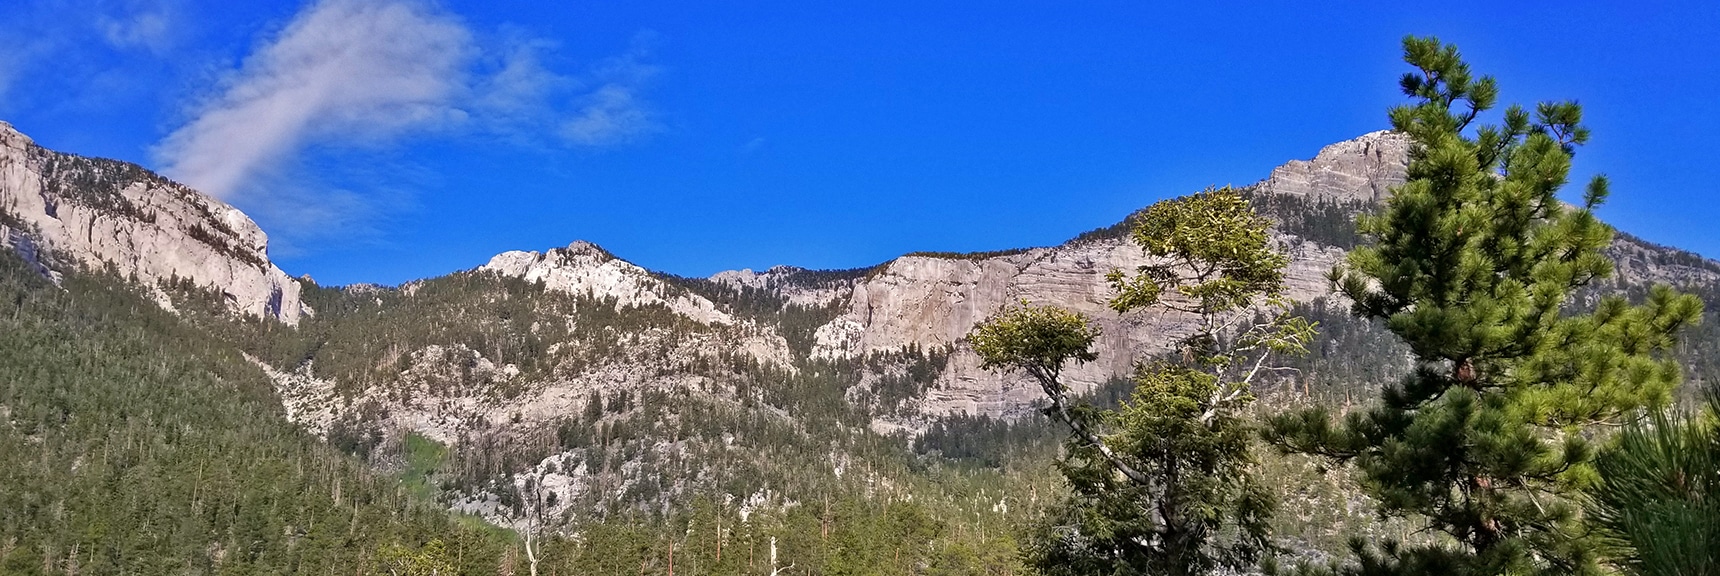 Looking Back at Mummy's Head Area for Climbing Route Ideas | Deer Creek Rd - Mummy Cliffs - Mummy Springs - Raintree - Fletcher Peak - Cougar Ridge Trail Circuit | Mt Charleston Wilderness | Spring Mountains, Nevada